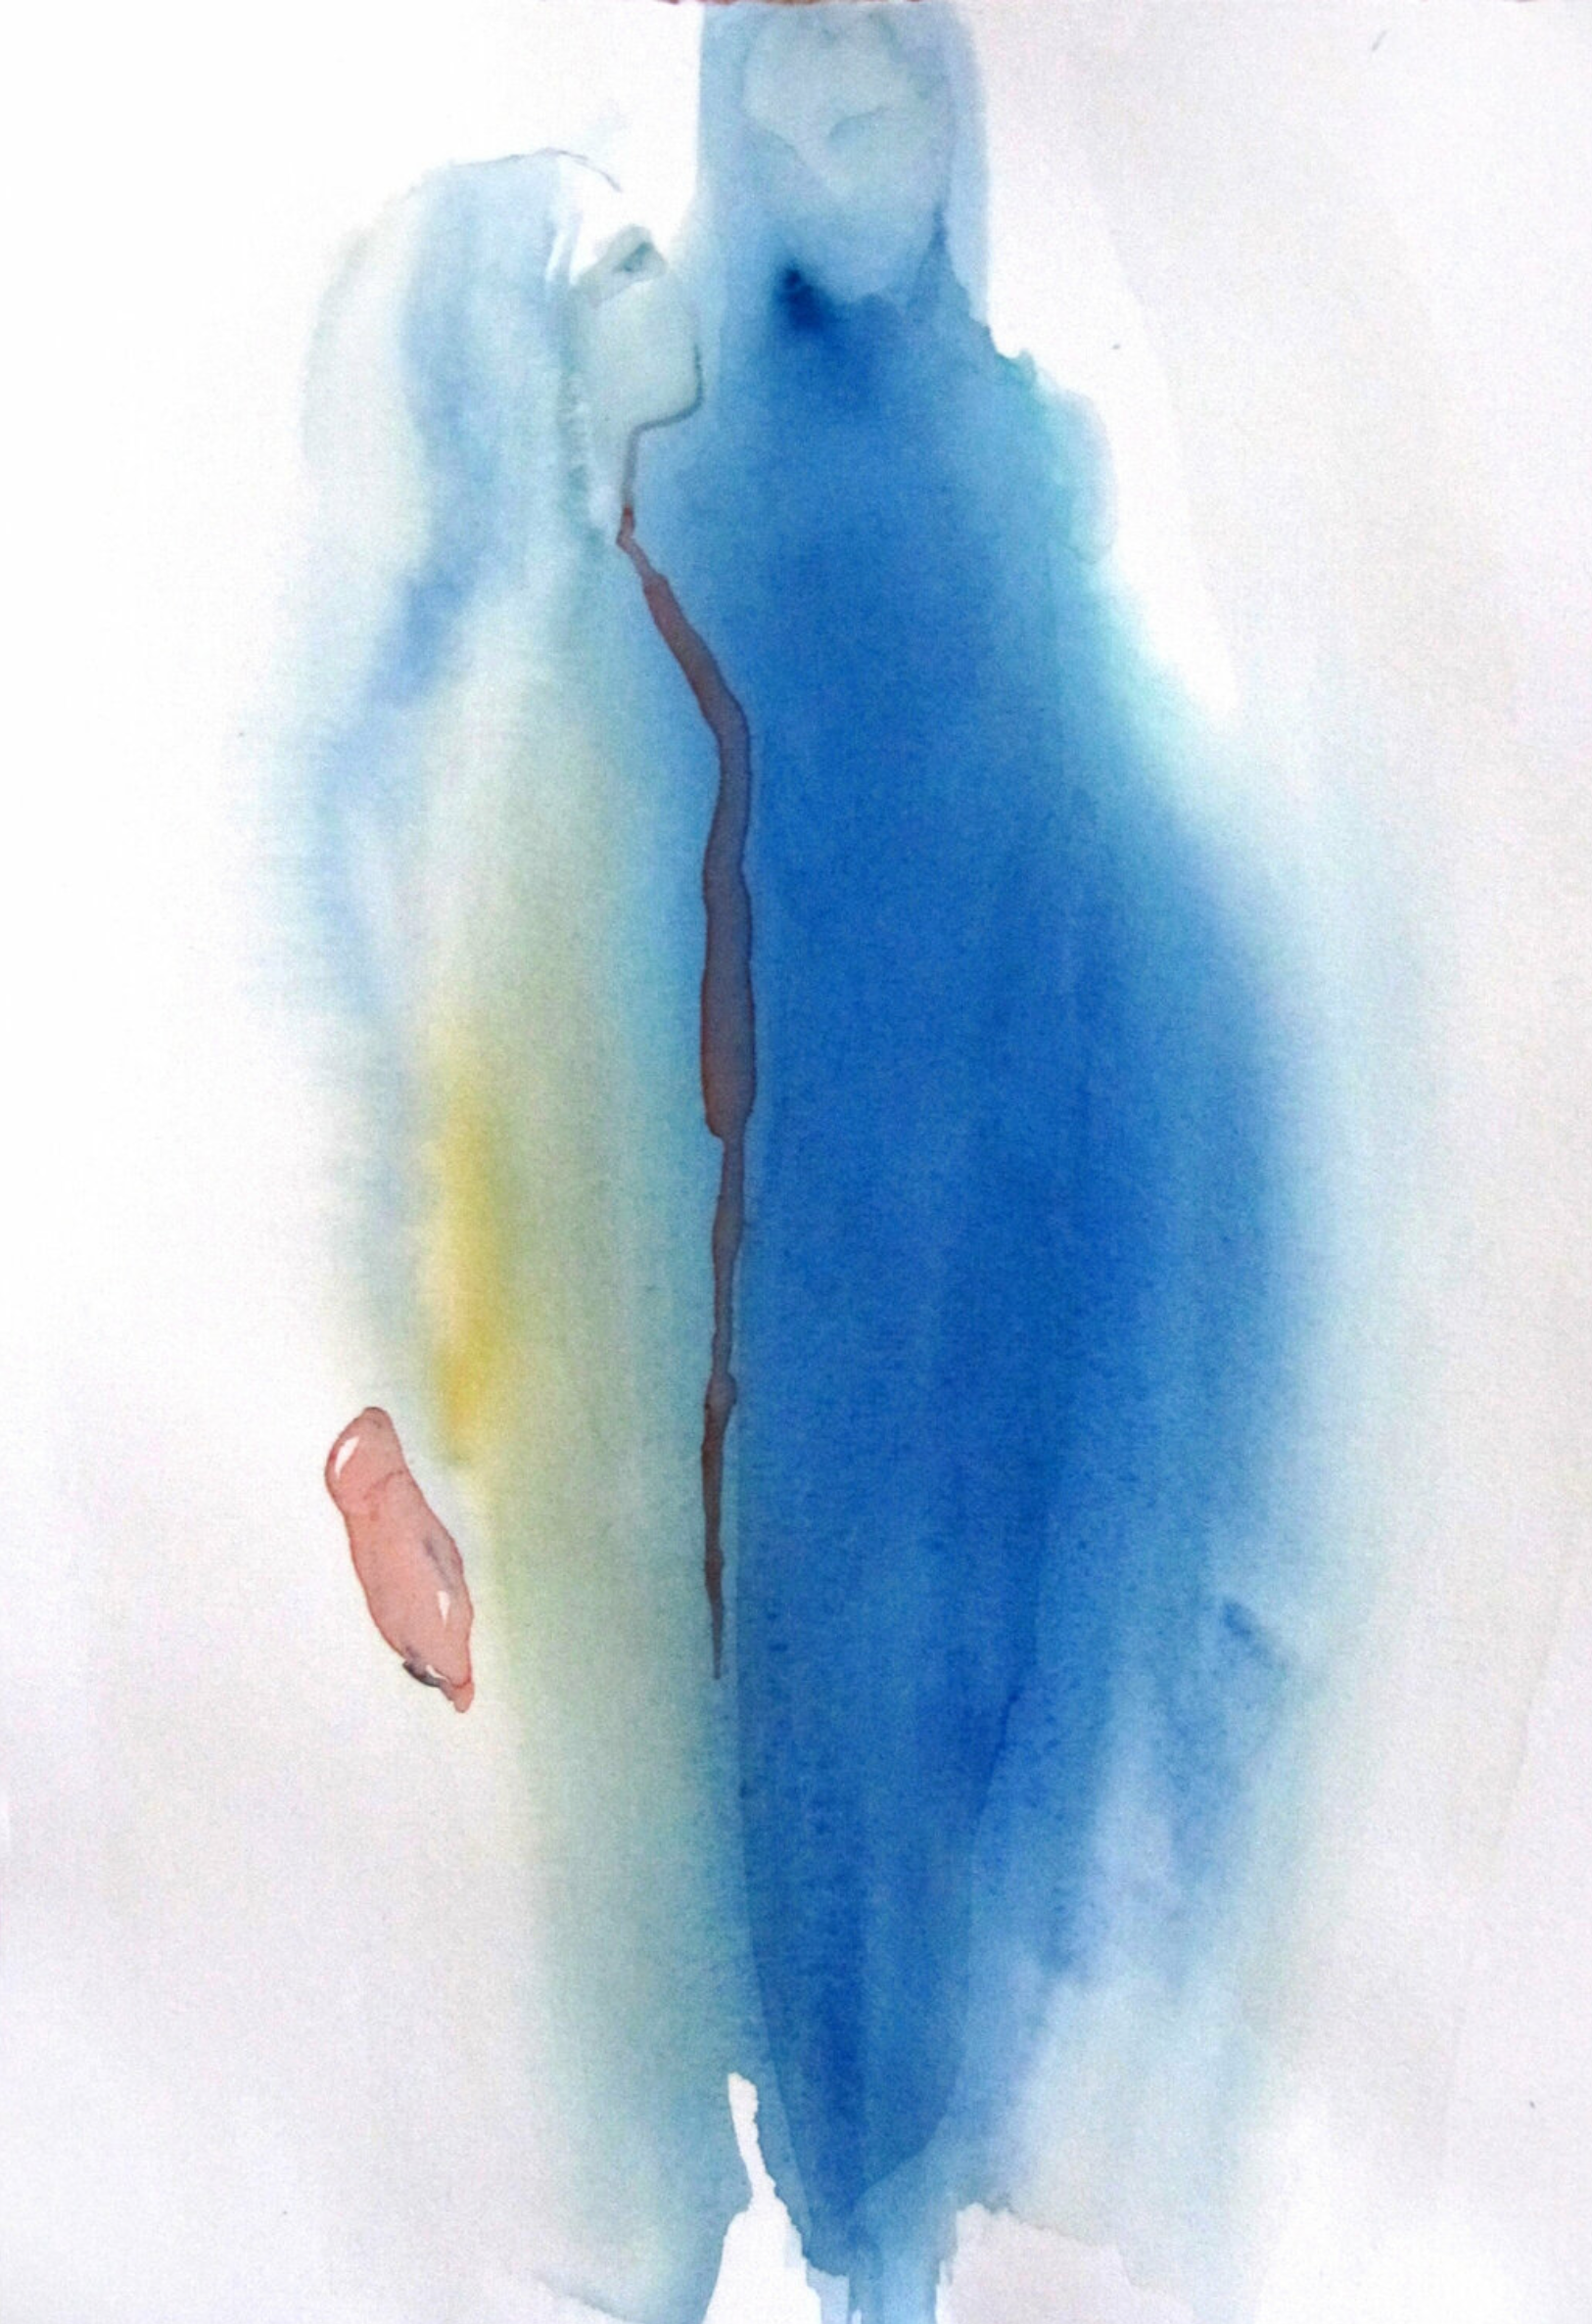 Sylvia Baldeva's "Inspiration" zeigt ein Aquarell, semi-abstraktes gemaltes Gemälde. Paar, Transzendenz, Metaphysik, Farbe Blau.